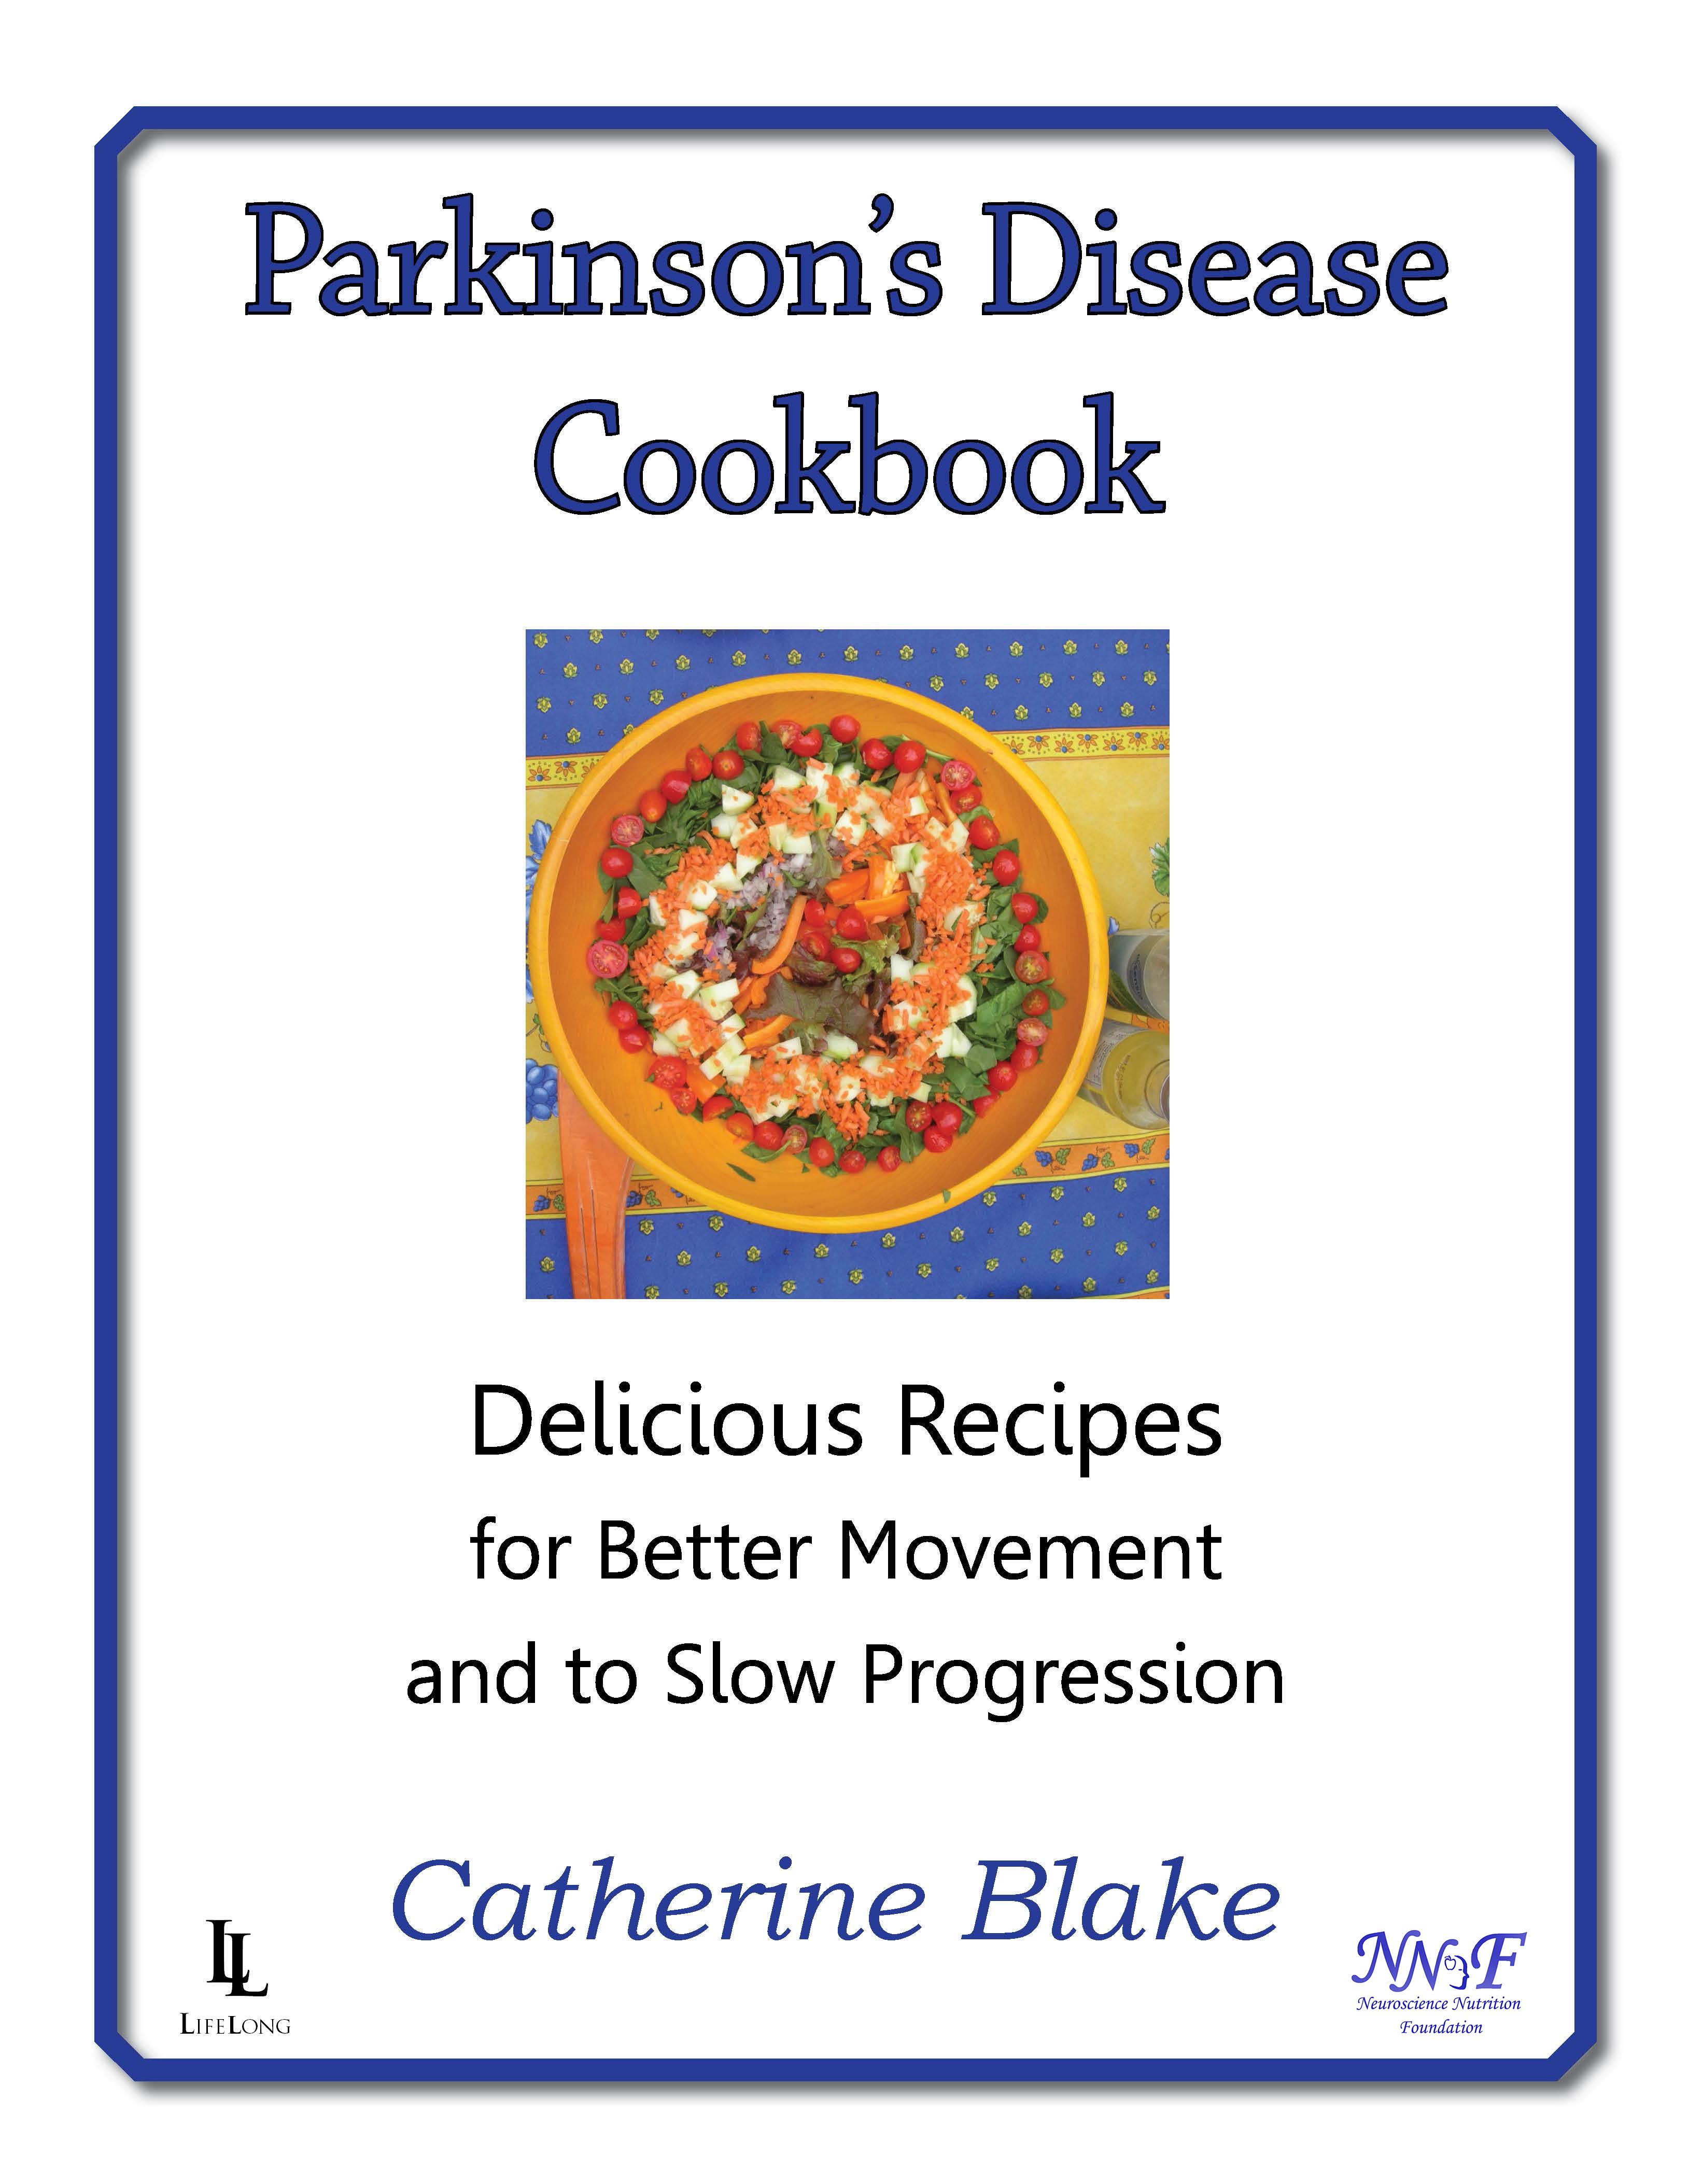 Parkinson's Disease Cookbook by Catherine Blake